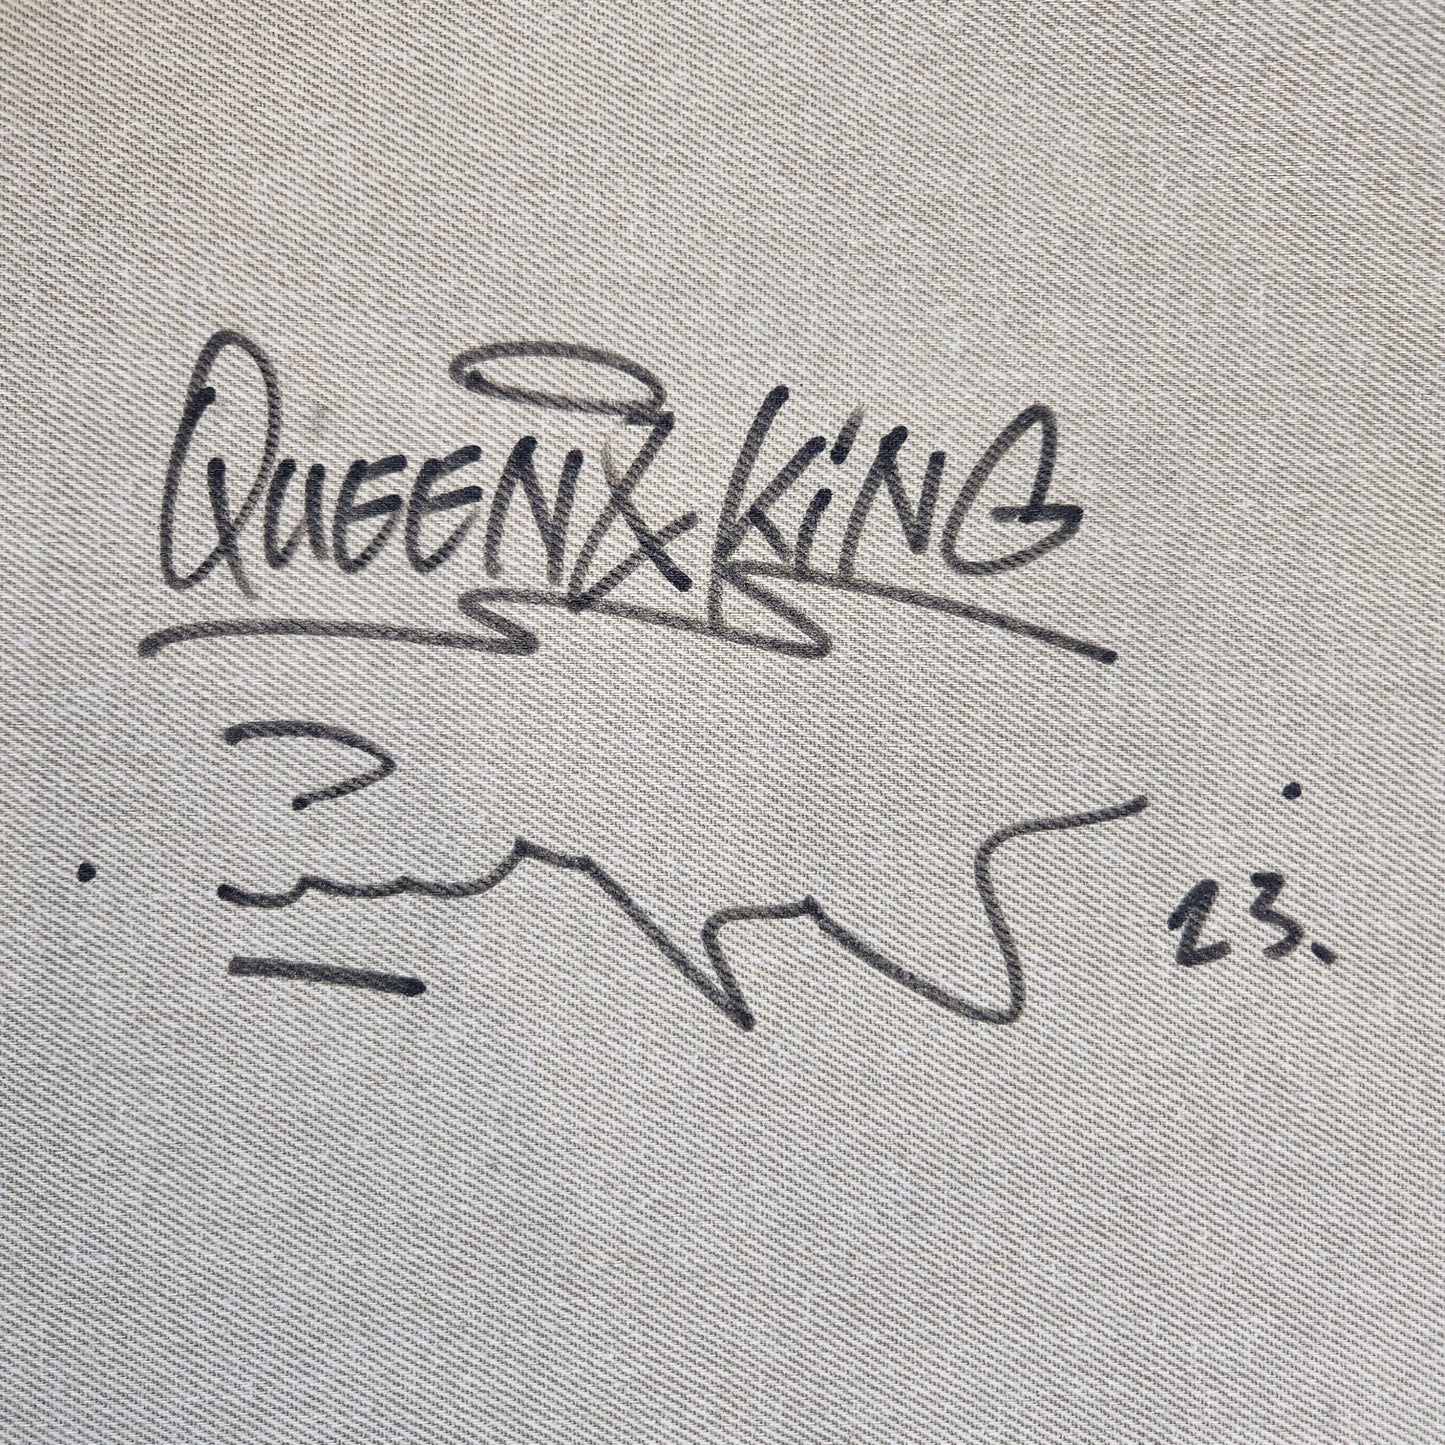 Queen • Mr. Oreke • Original Artwork